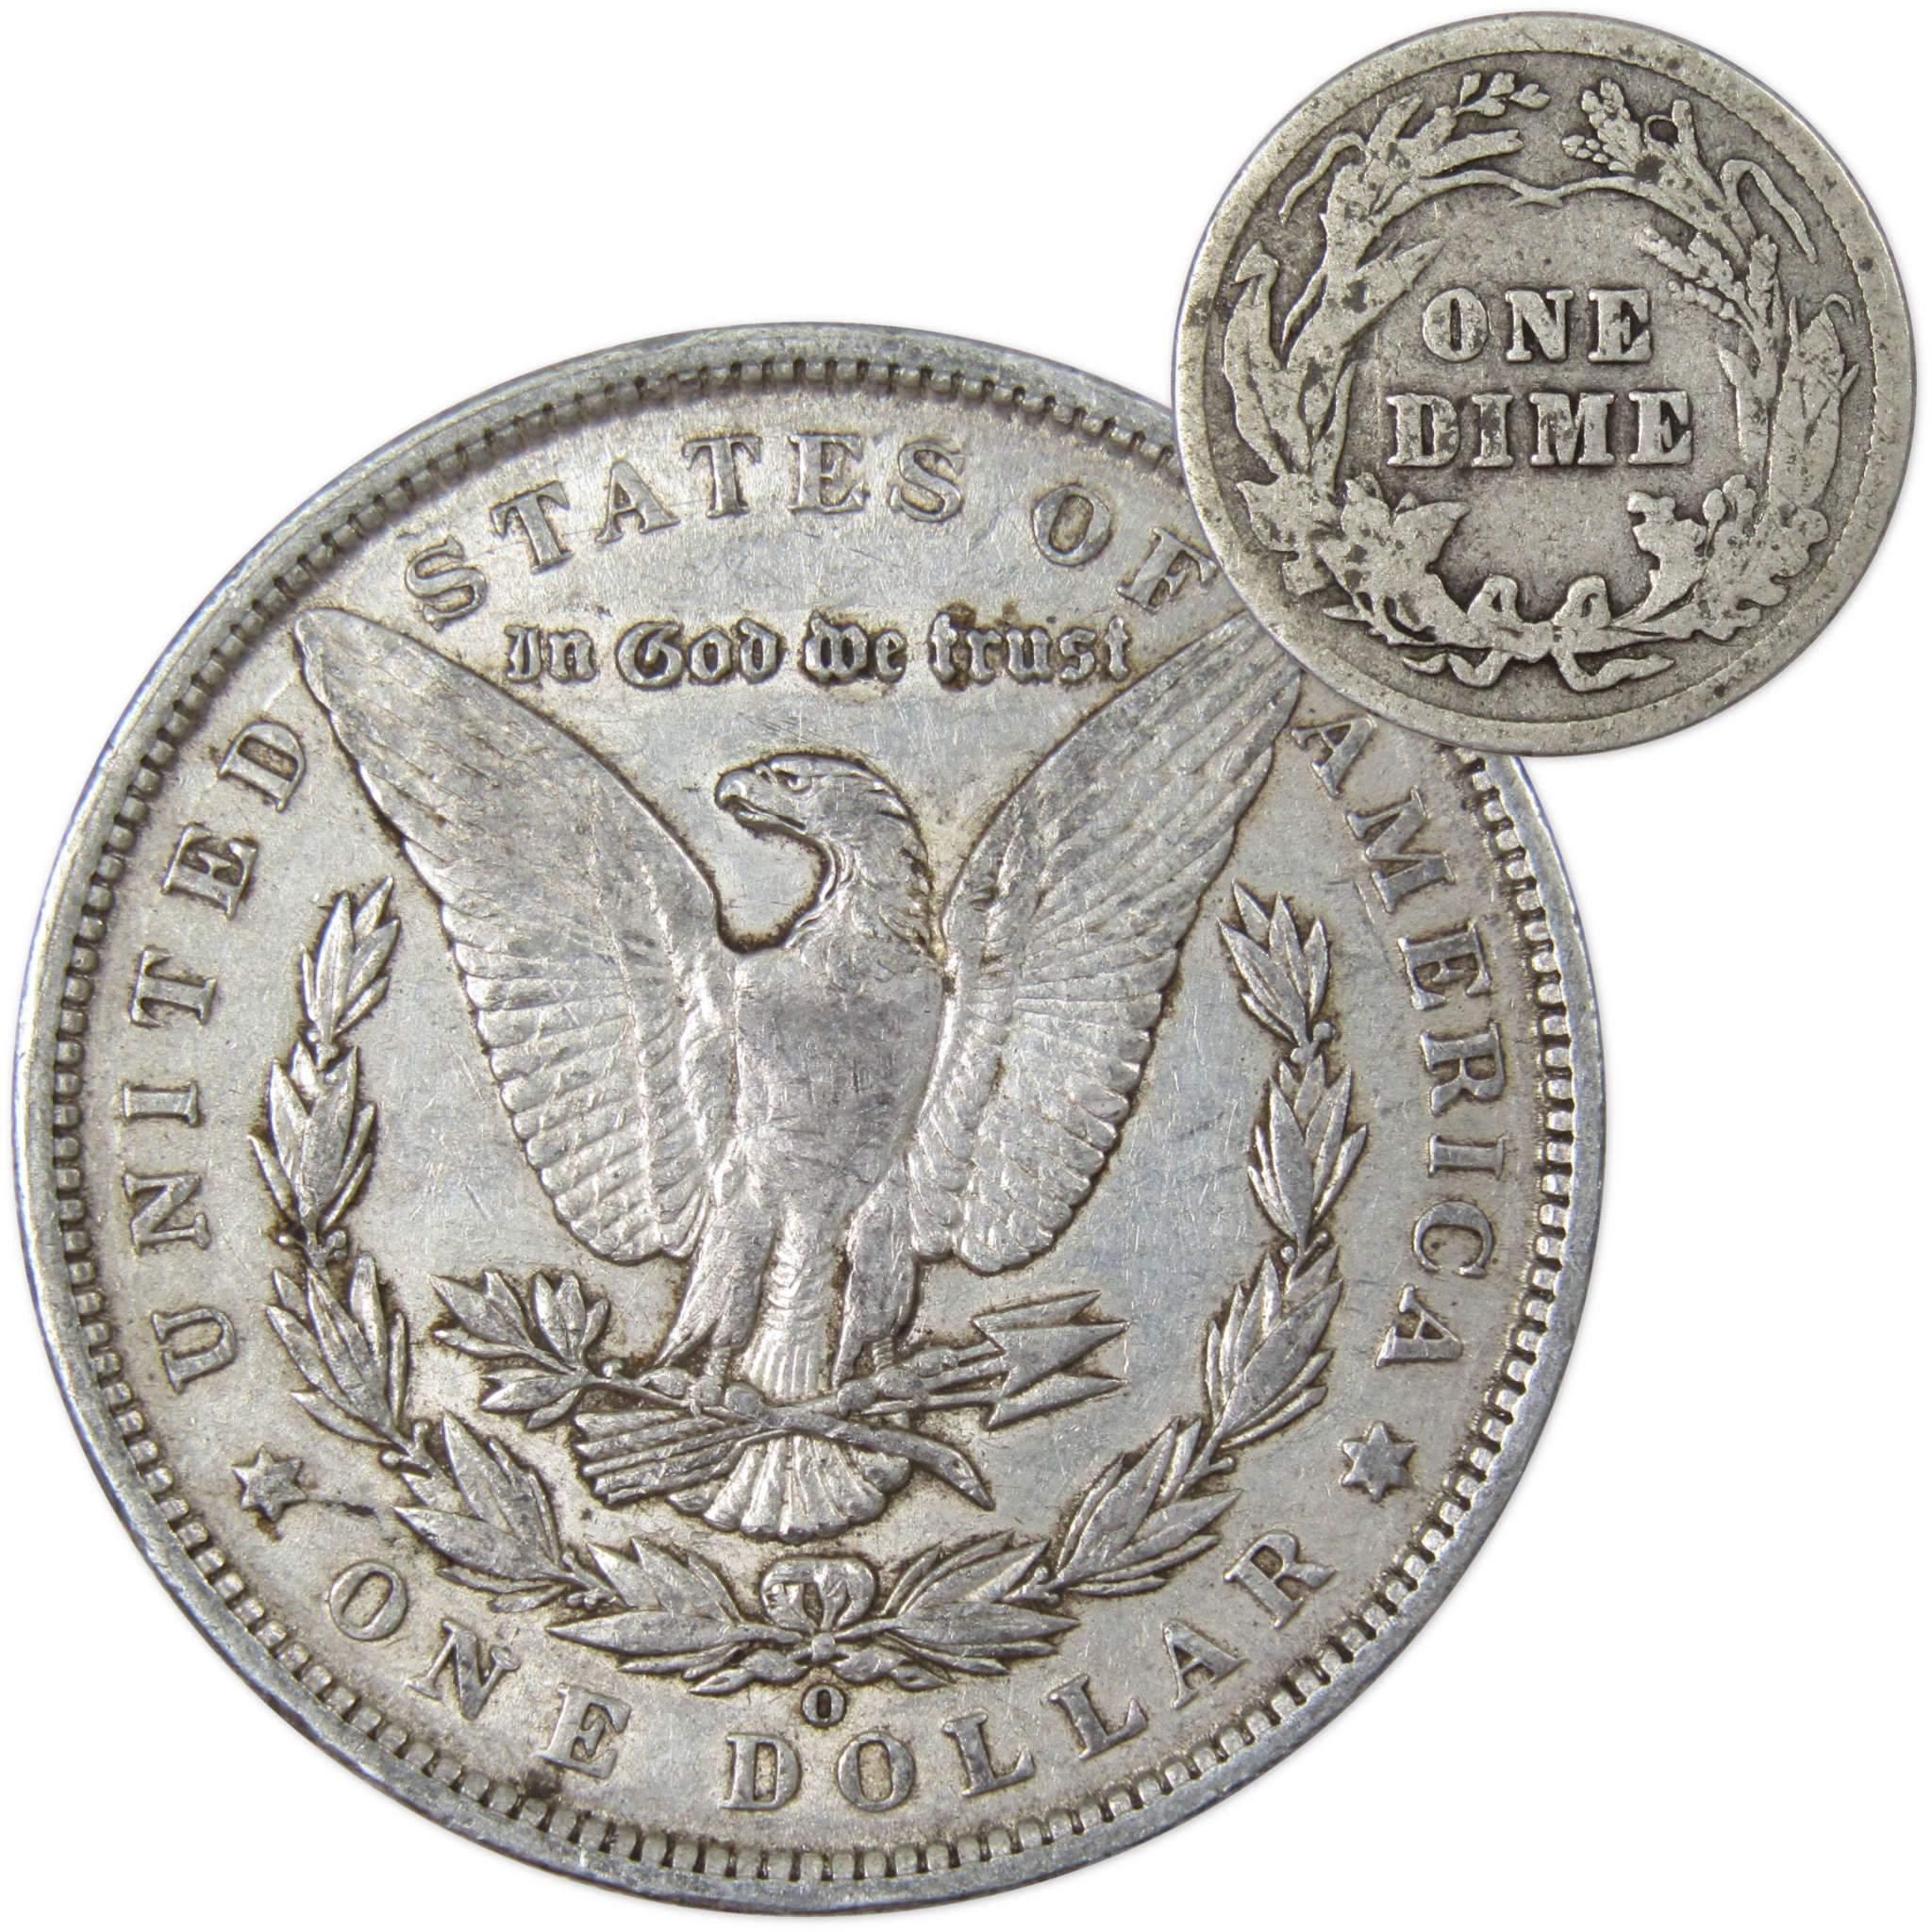 1900 O Morgan Dollar XF EF Extremely Fine with 1916 Barber Dime G Good - Morgan coin - Morgan silver dollar - Morgan silver dollar for sale - Profile Coins &amp; Collectibles